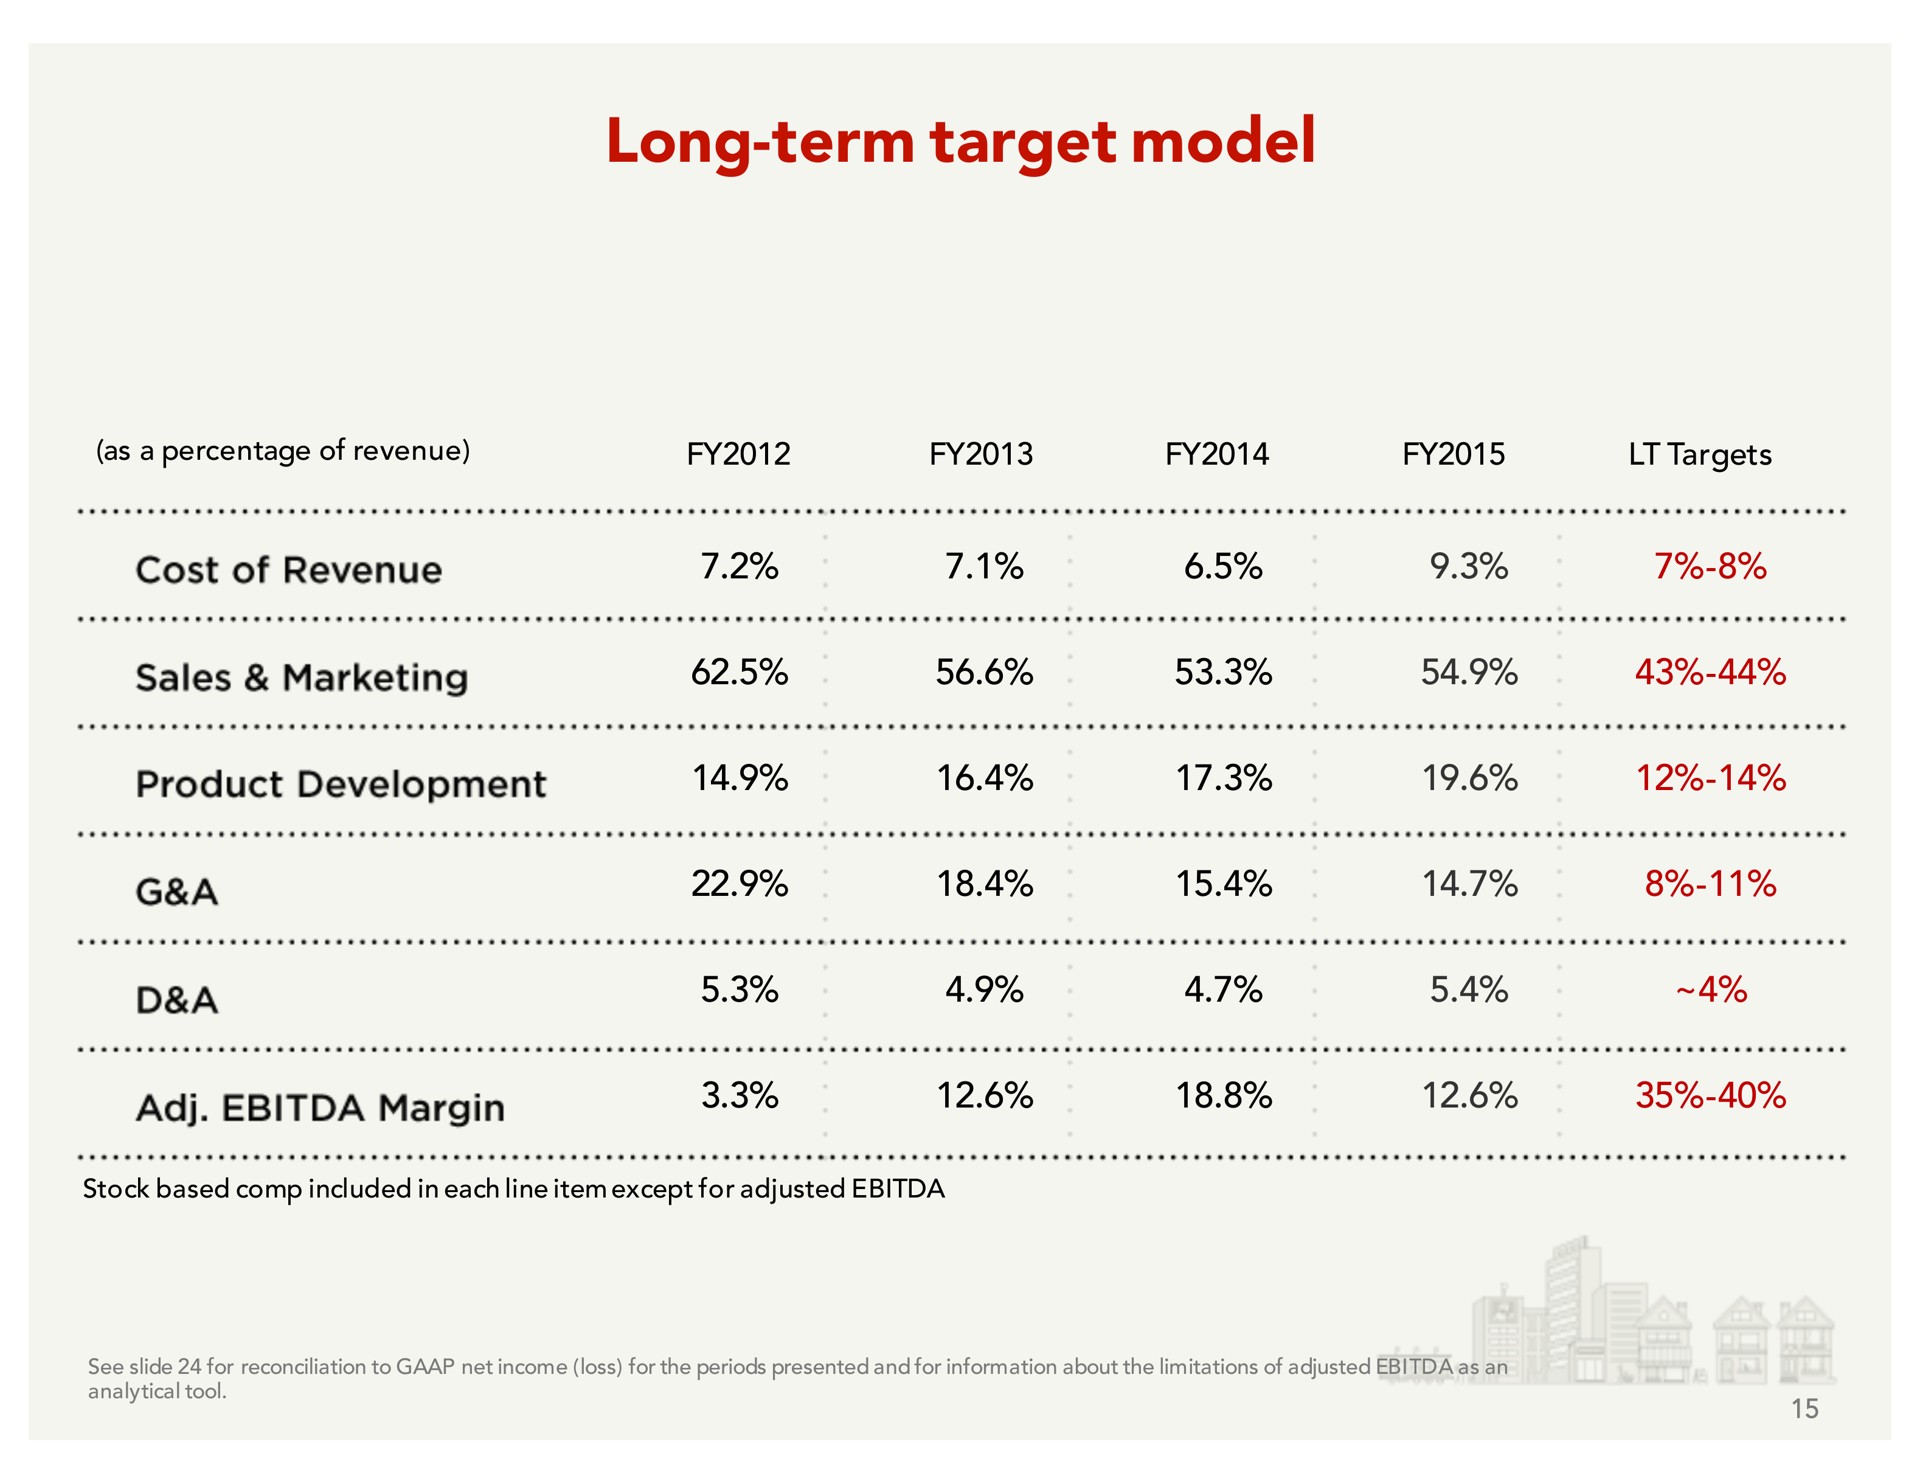 long term target model | Yelp